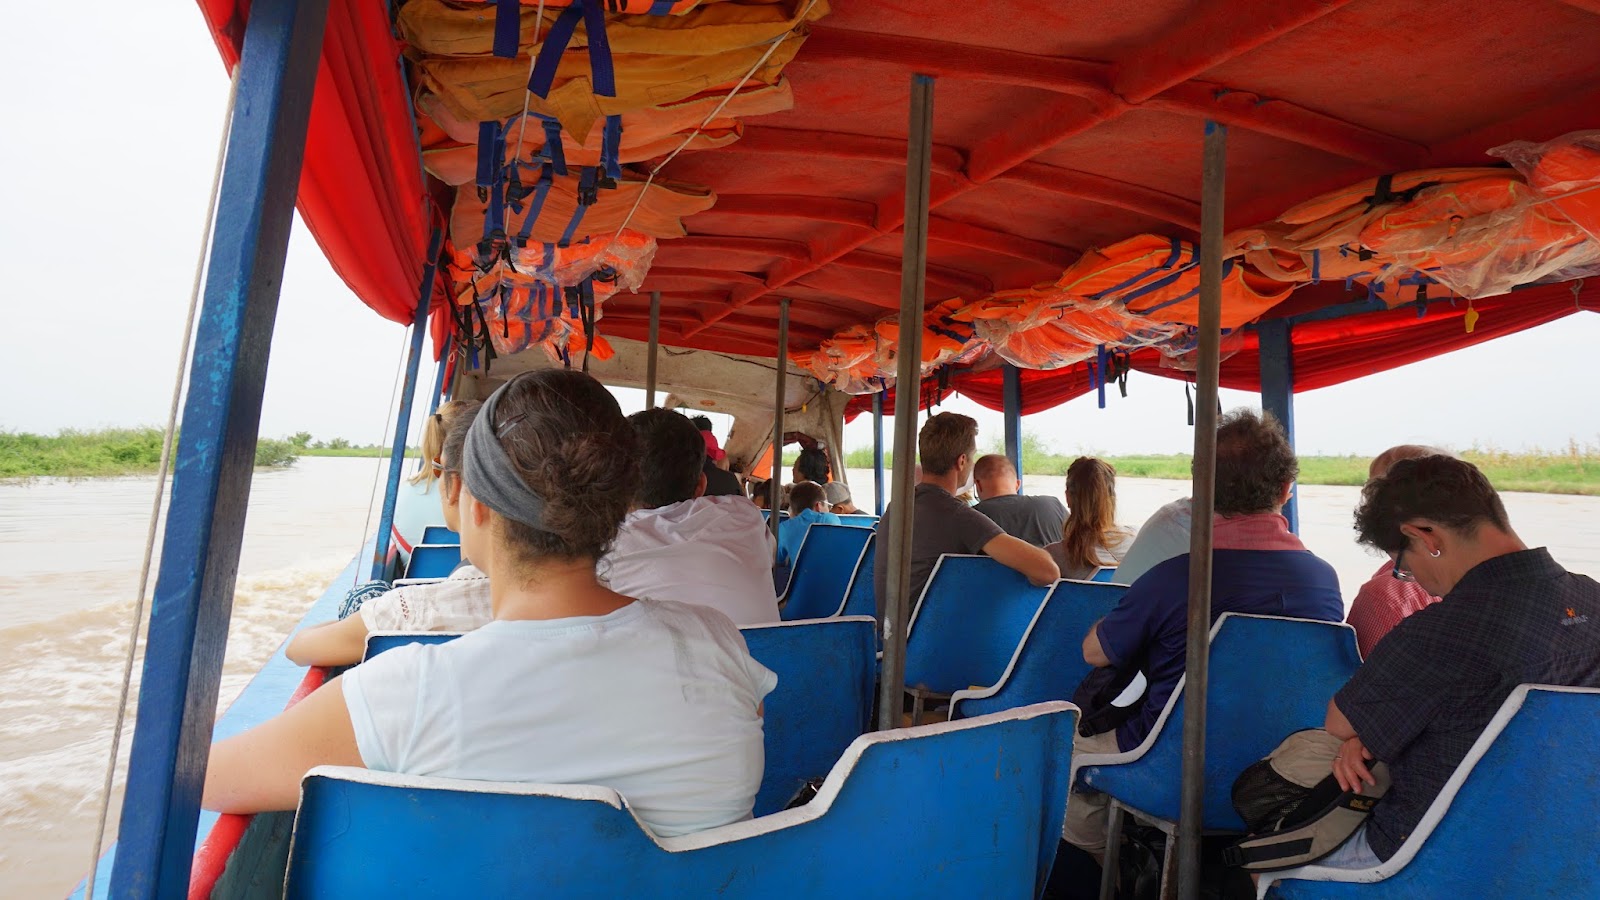 Taking the Angkor Express from Battambang to Siem Reap